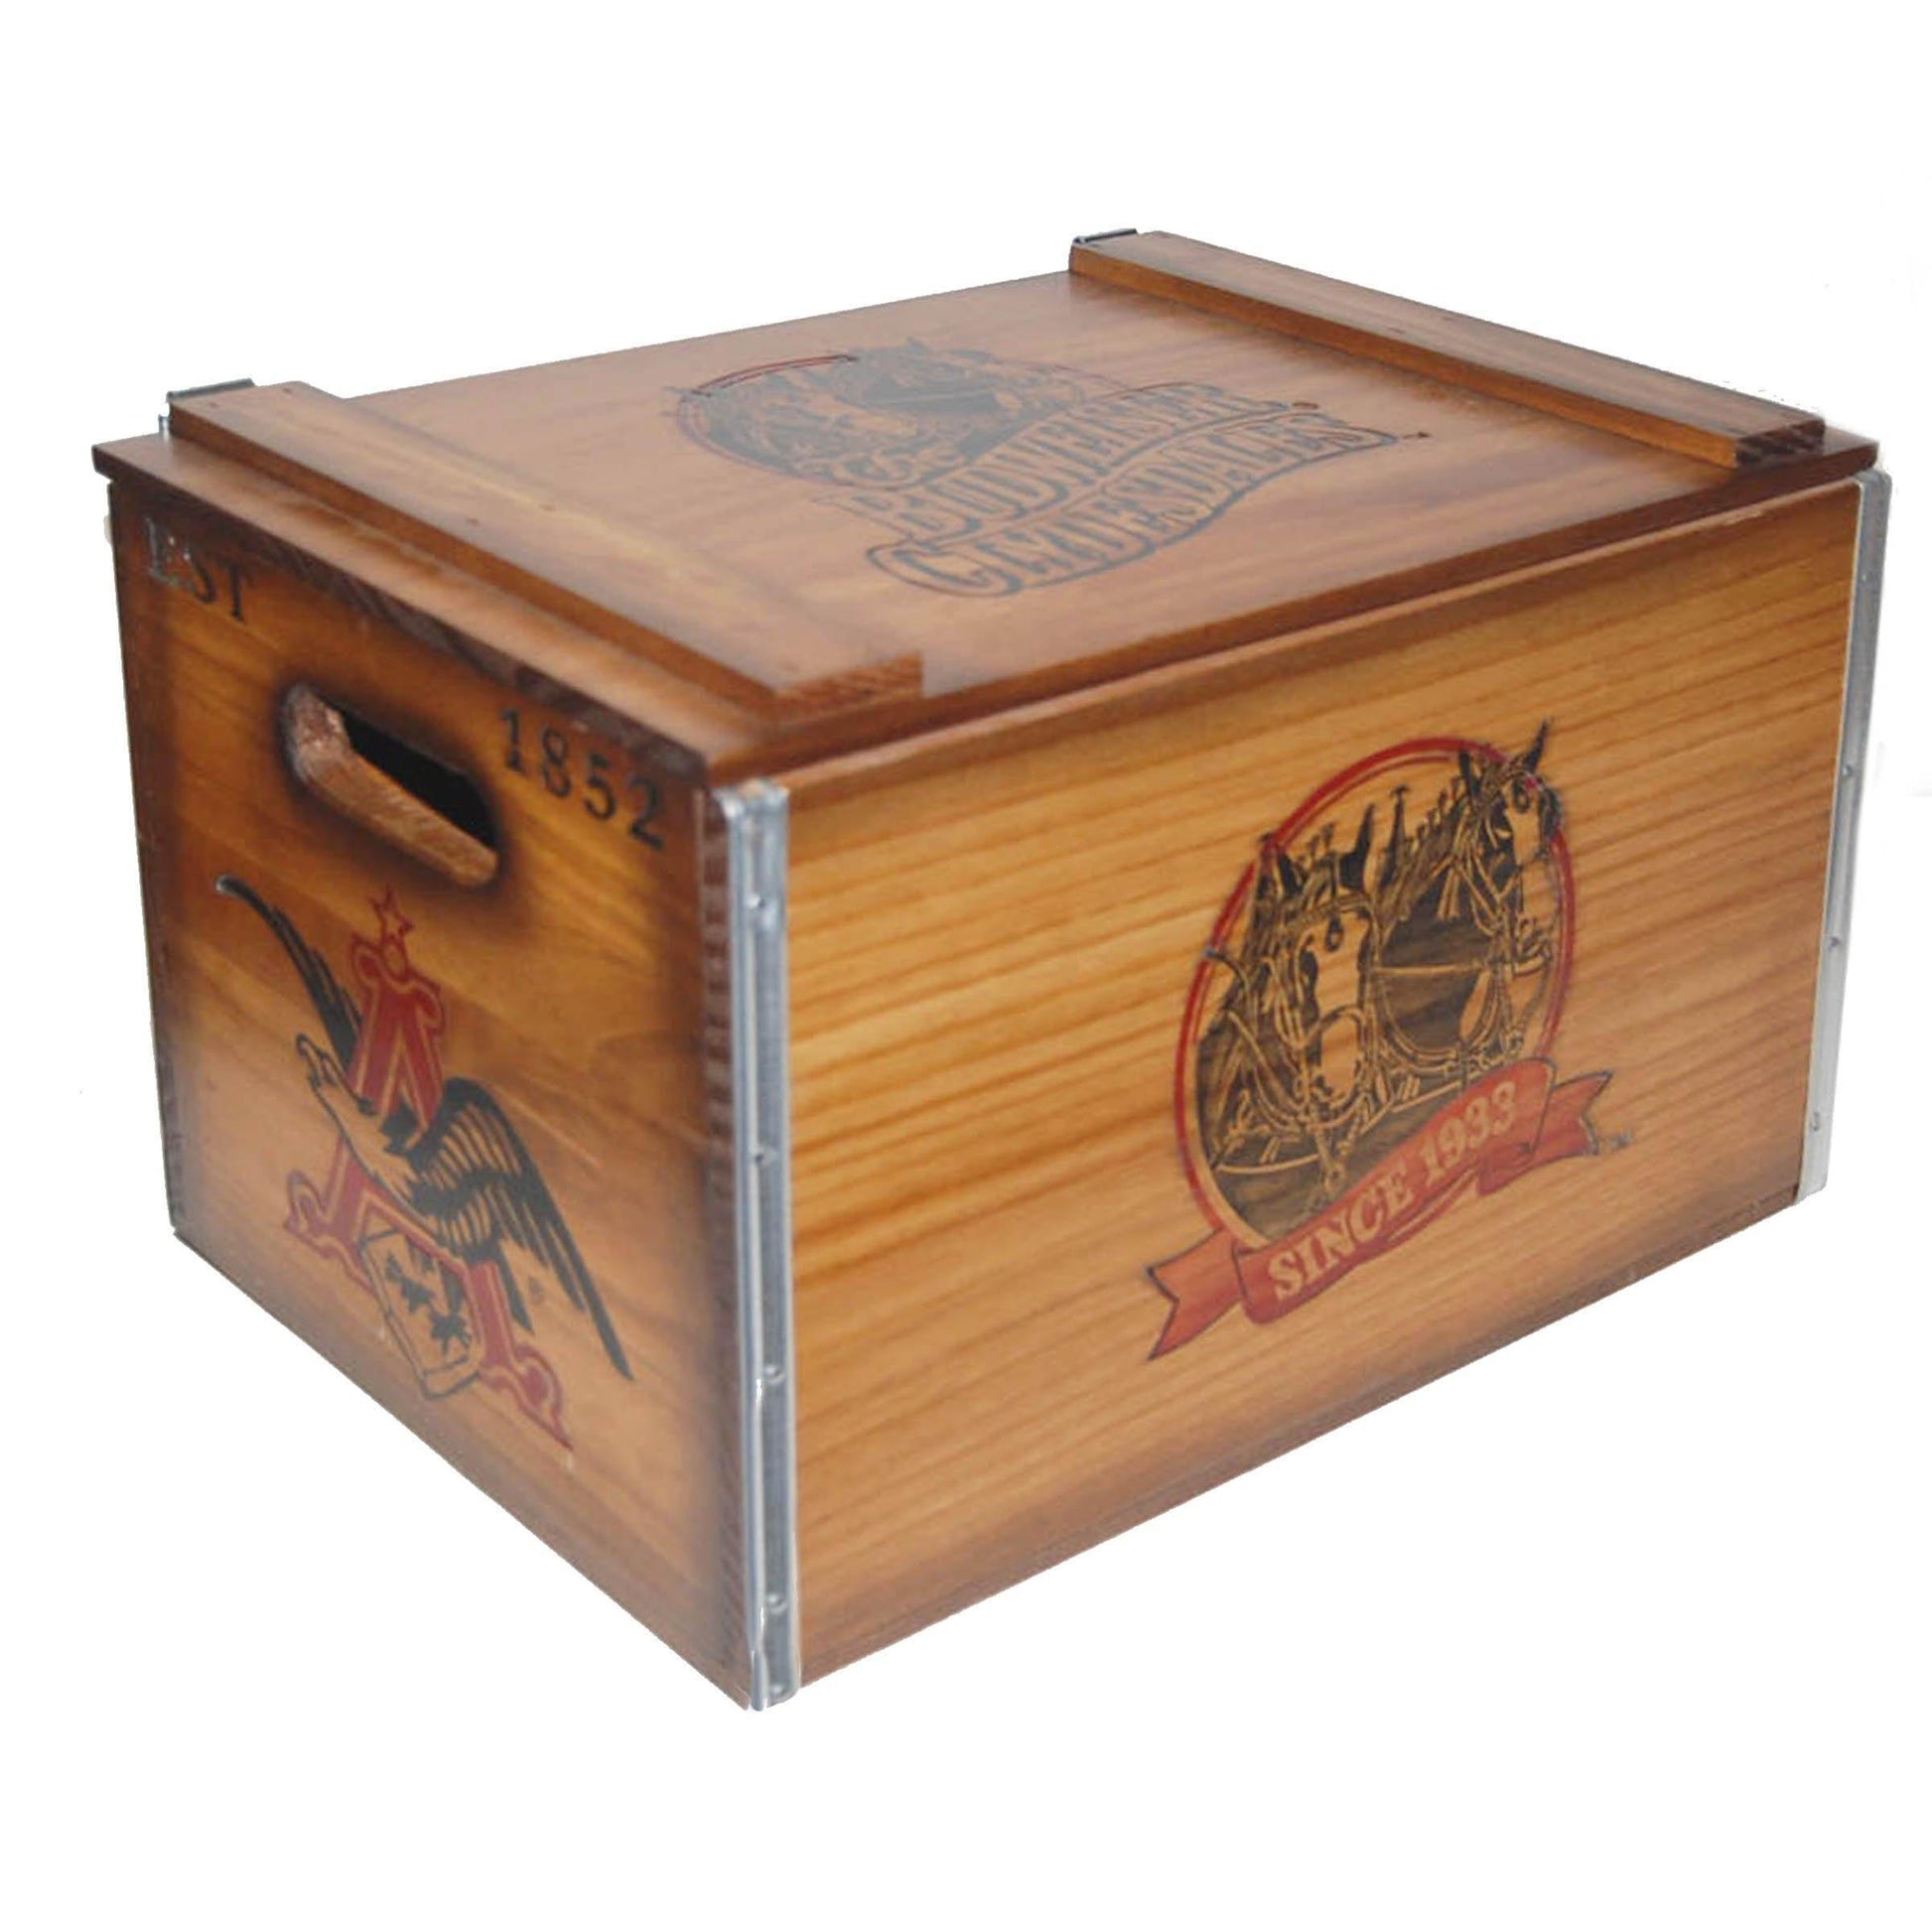 budweiser clydesdale vintage beer crate